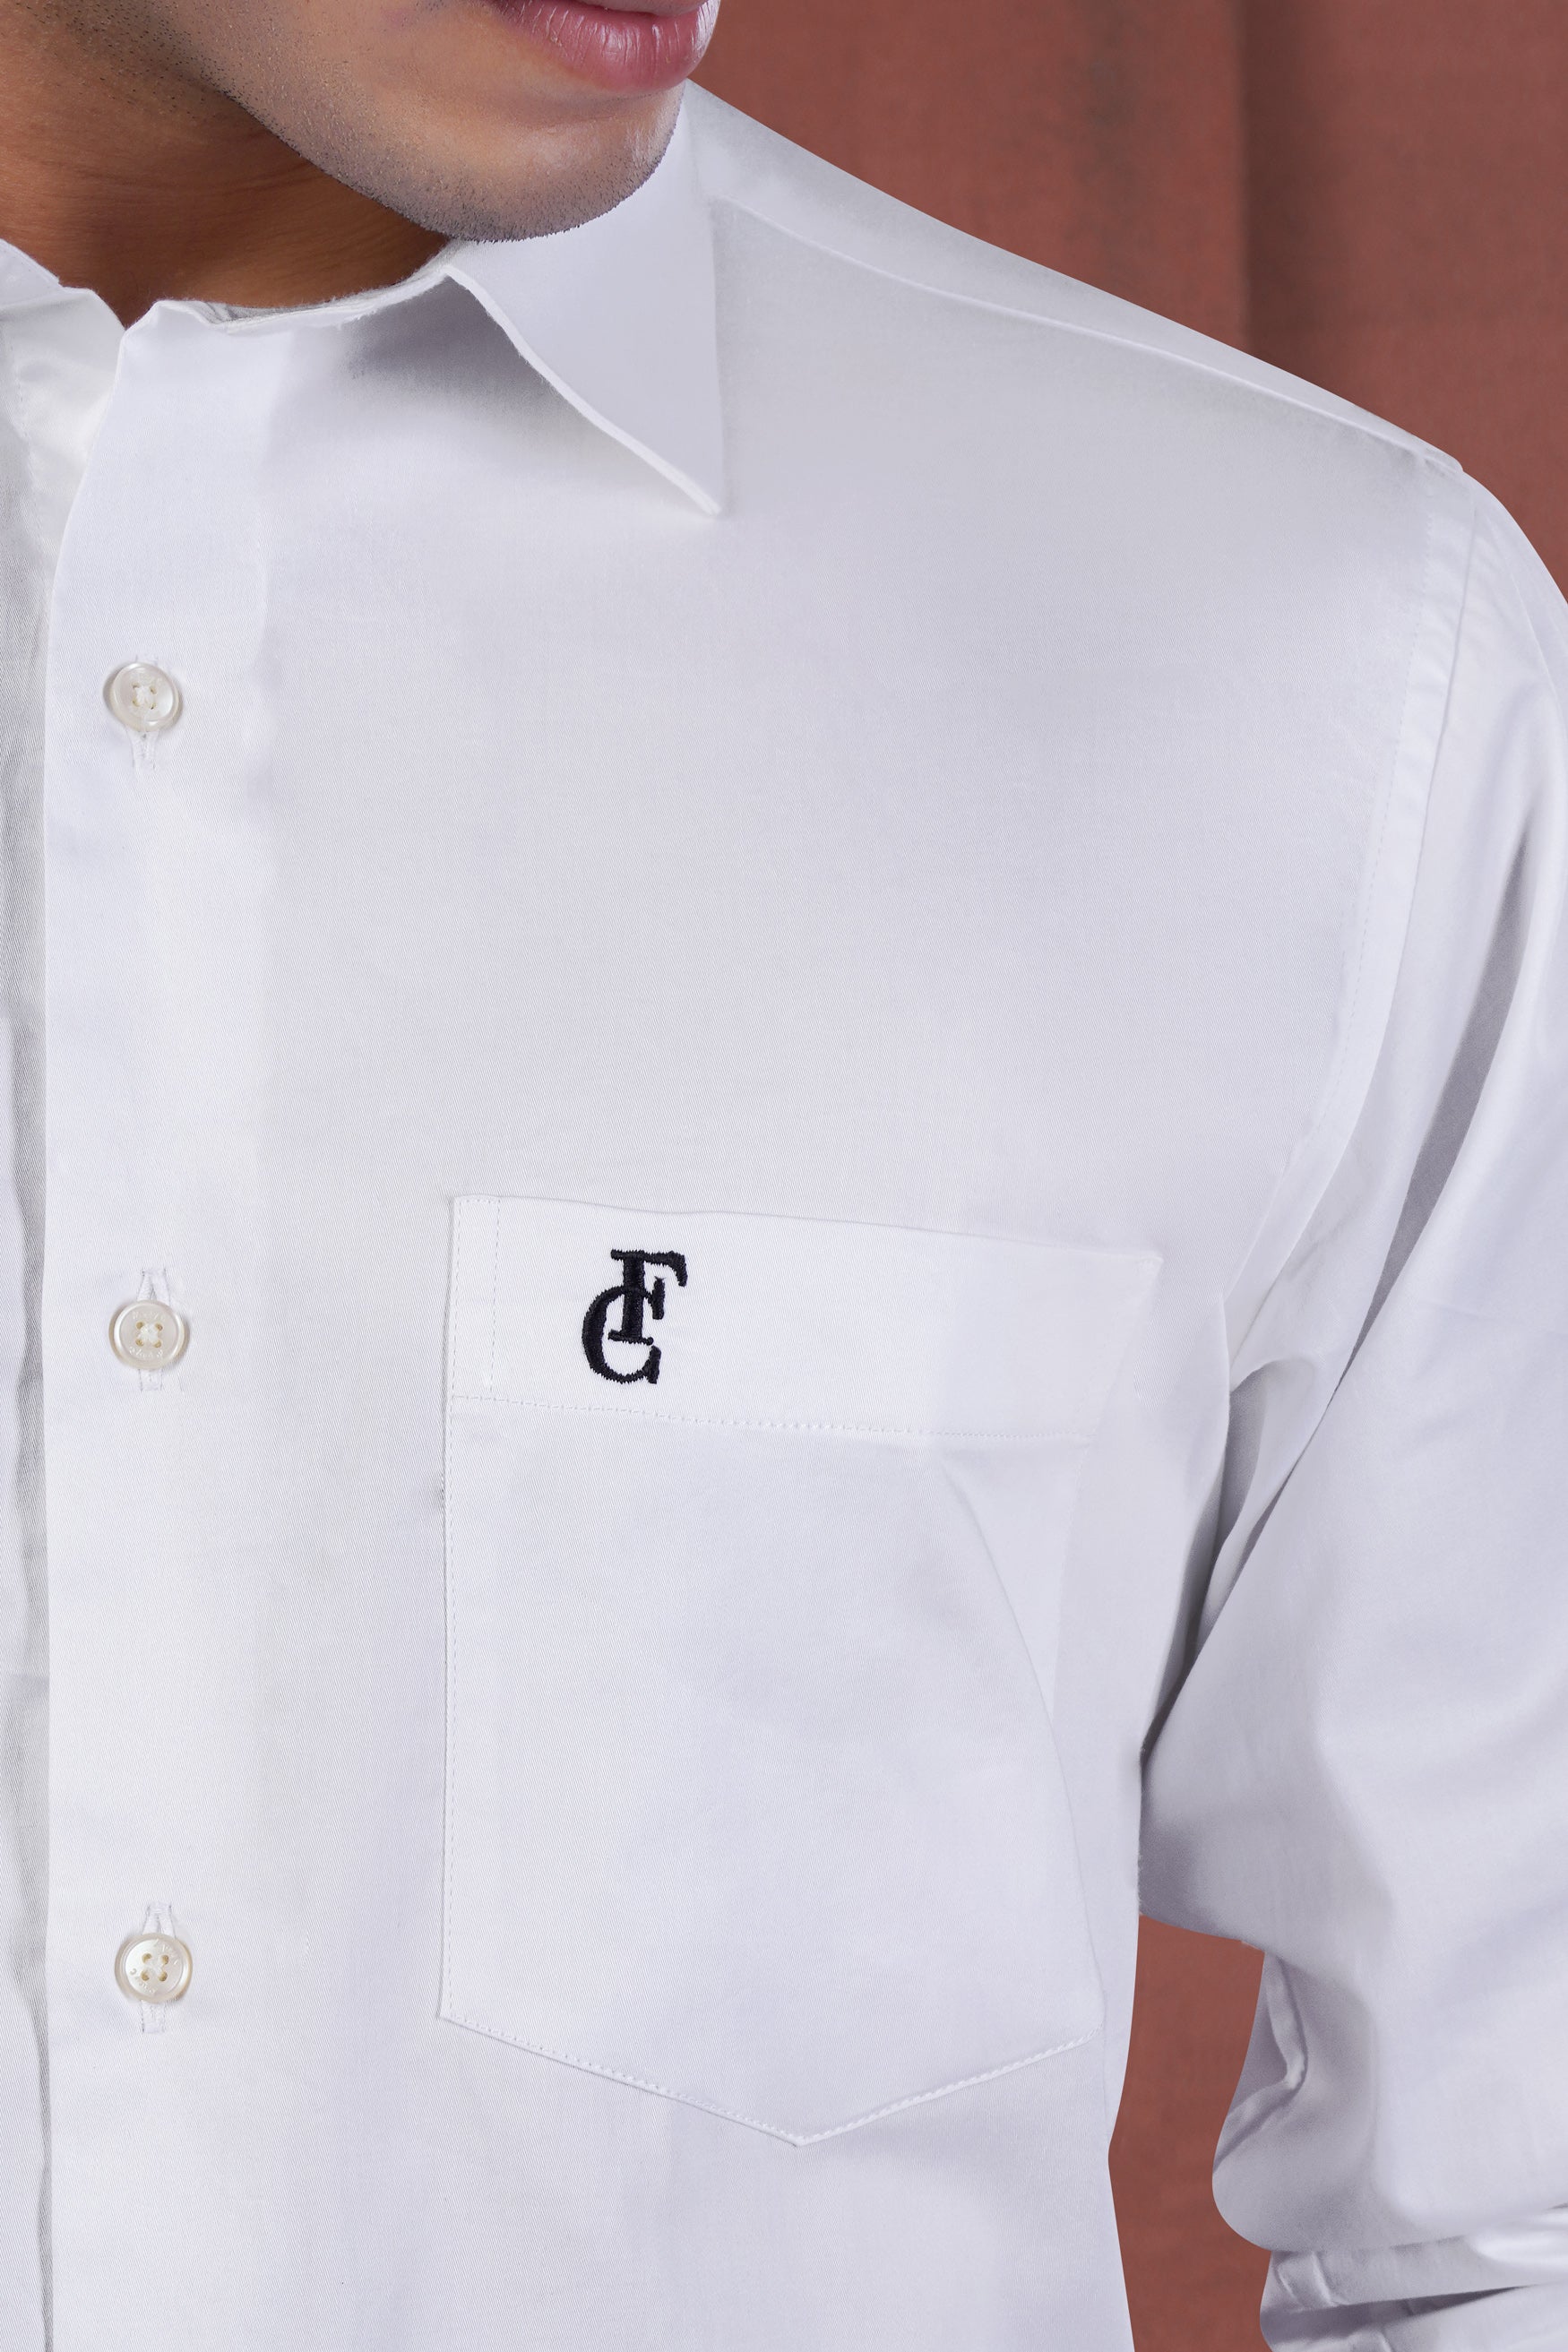 Bright White French Crown Acronym Embroidered Premium Cotton Designer Shirt